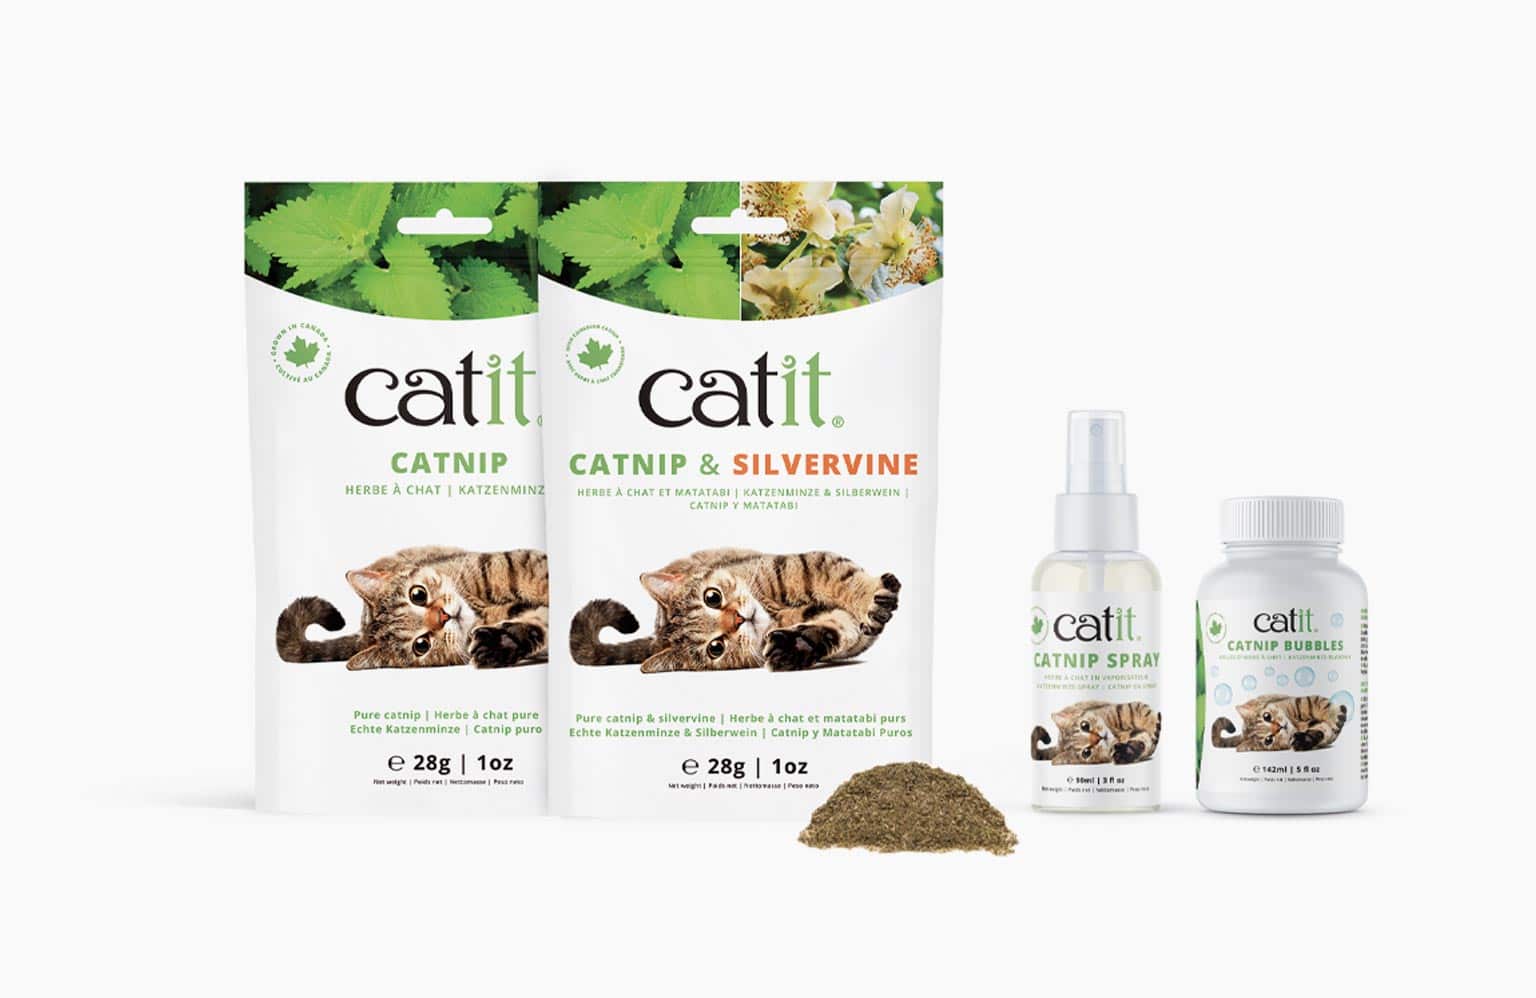 Catit Catnip range